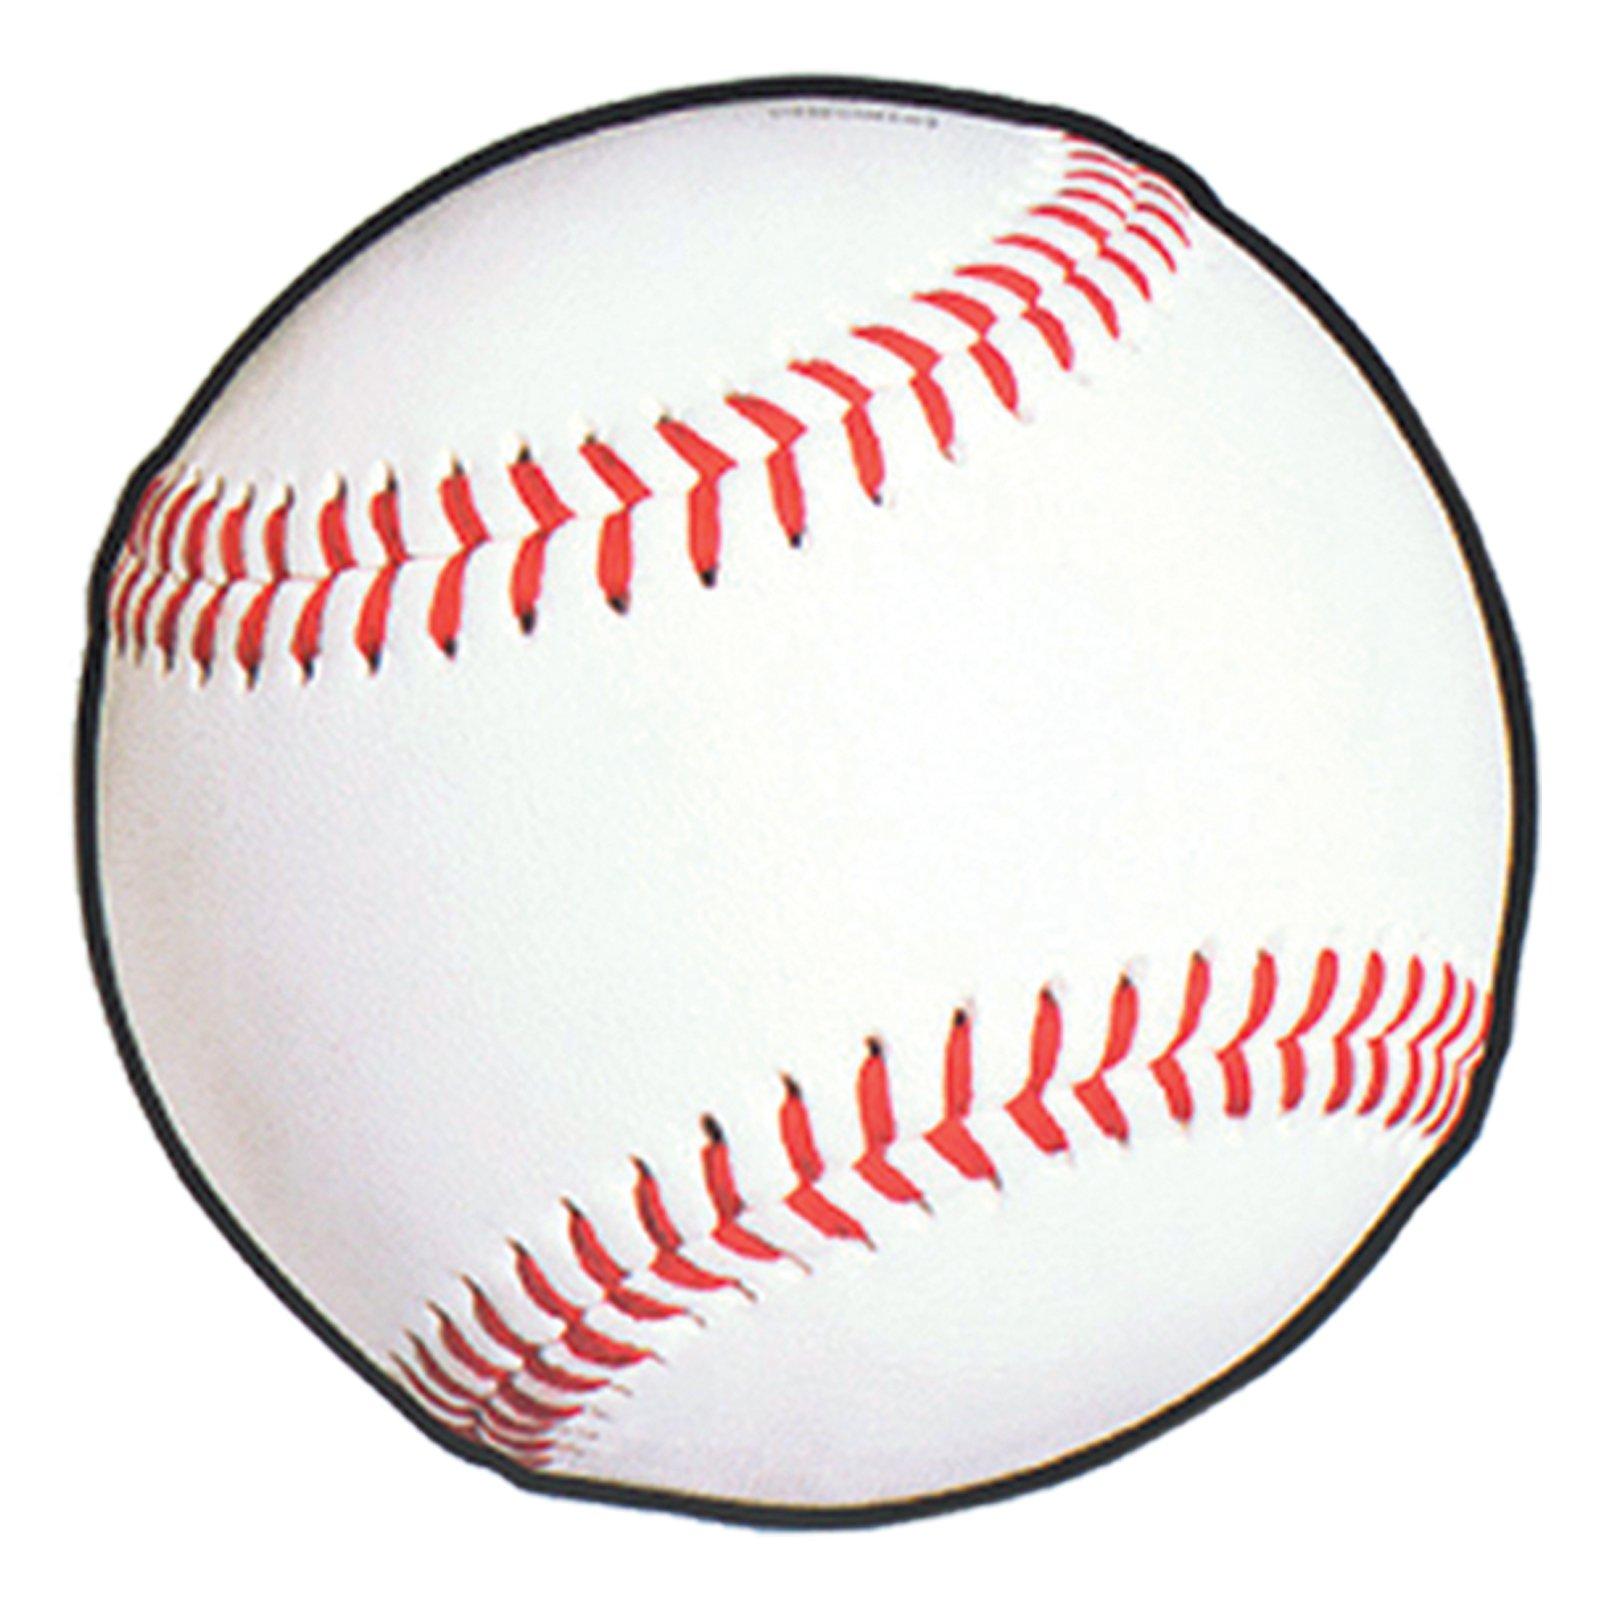 free clipart of baseball - photo #12